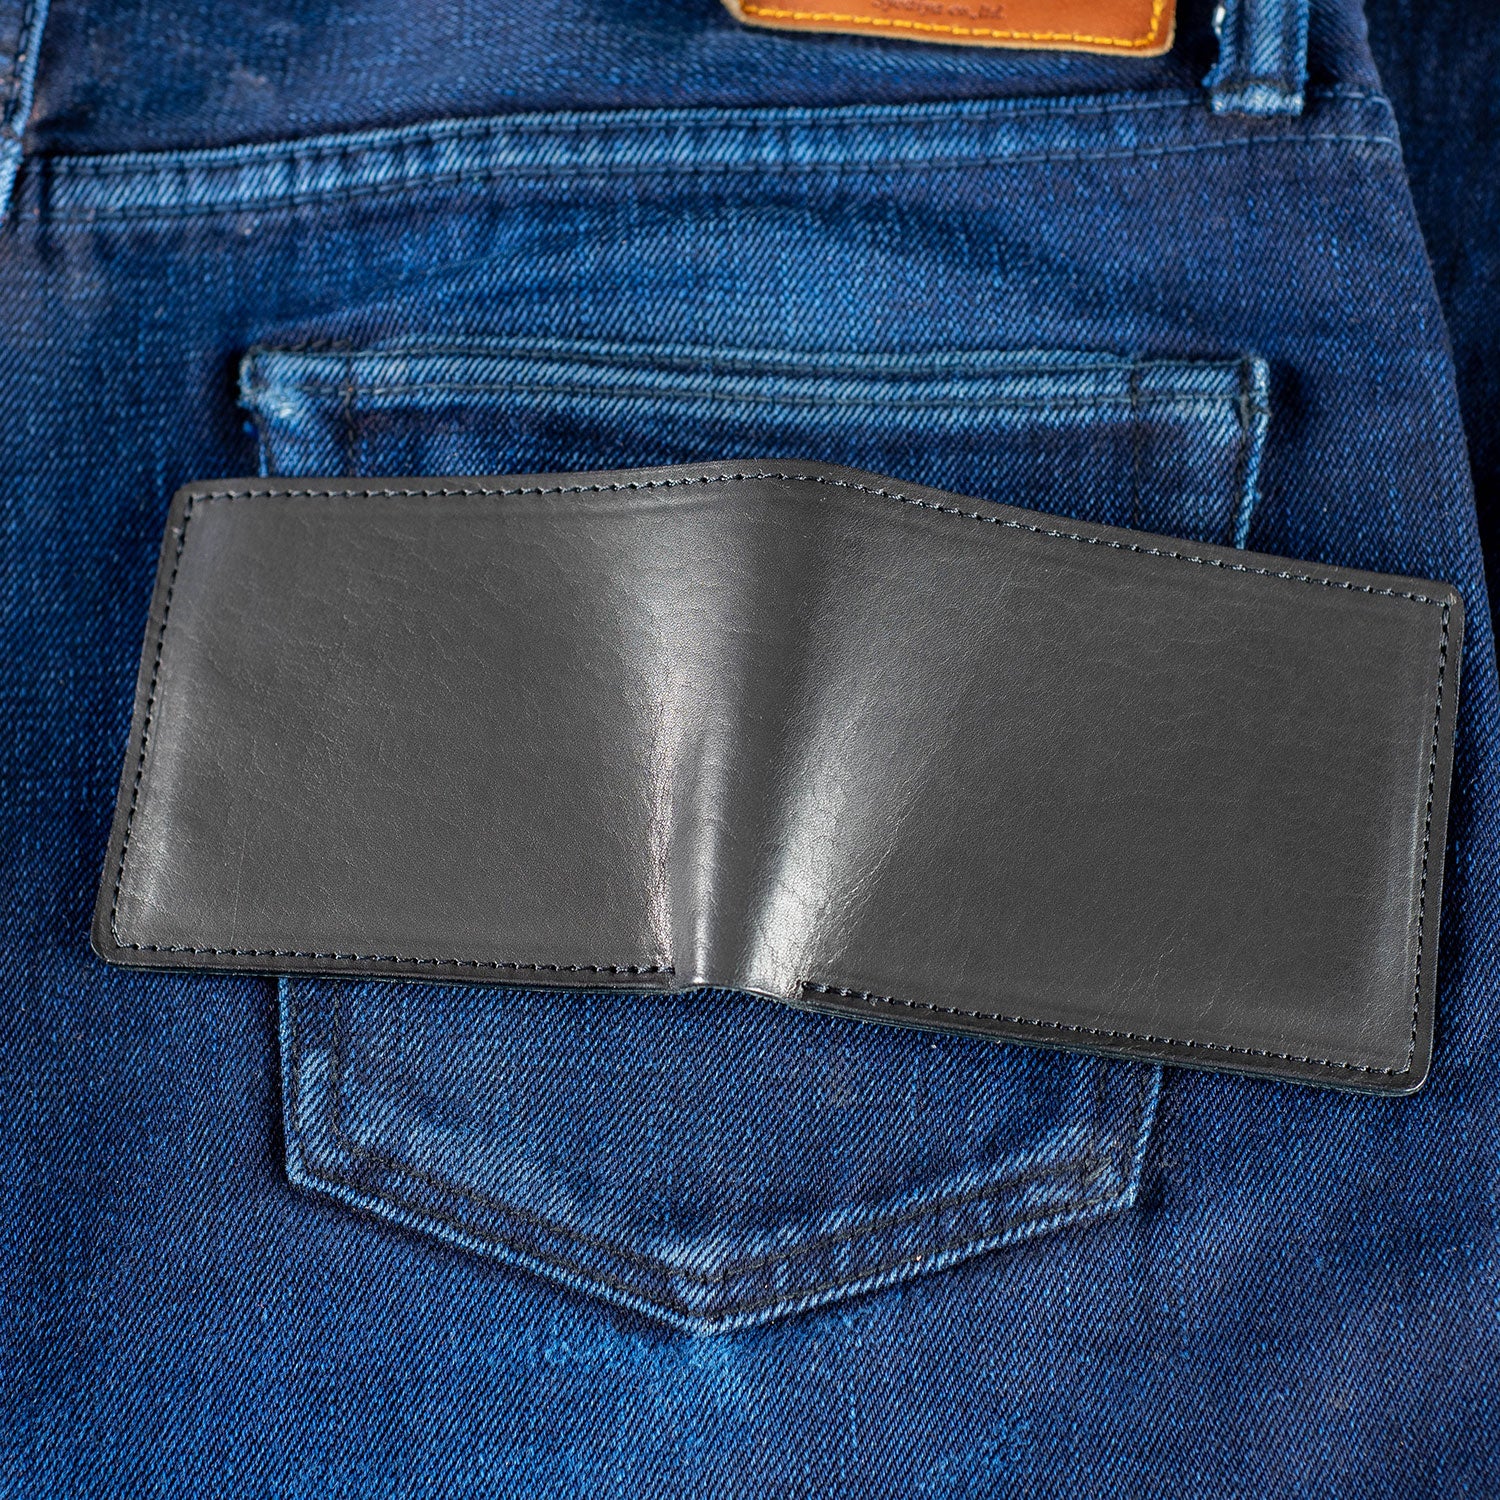 Glamfox - Black Checker Backpack Wallet Set